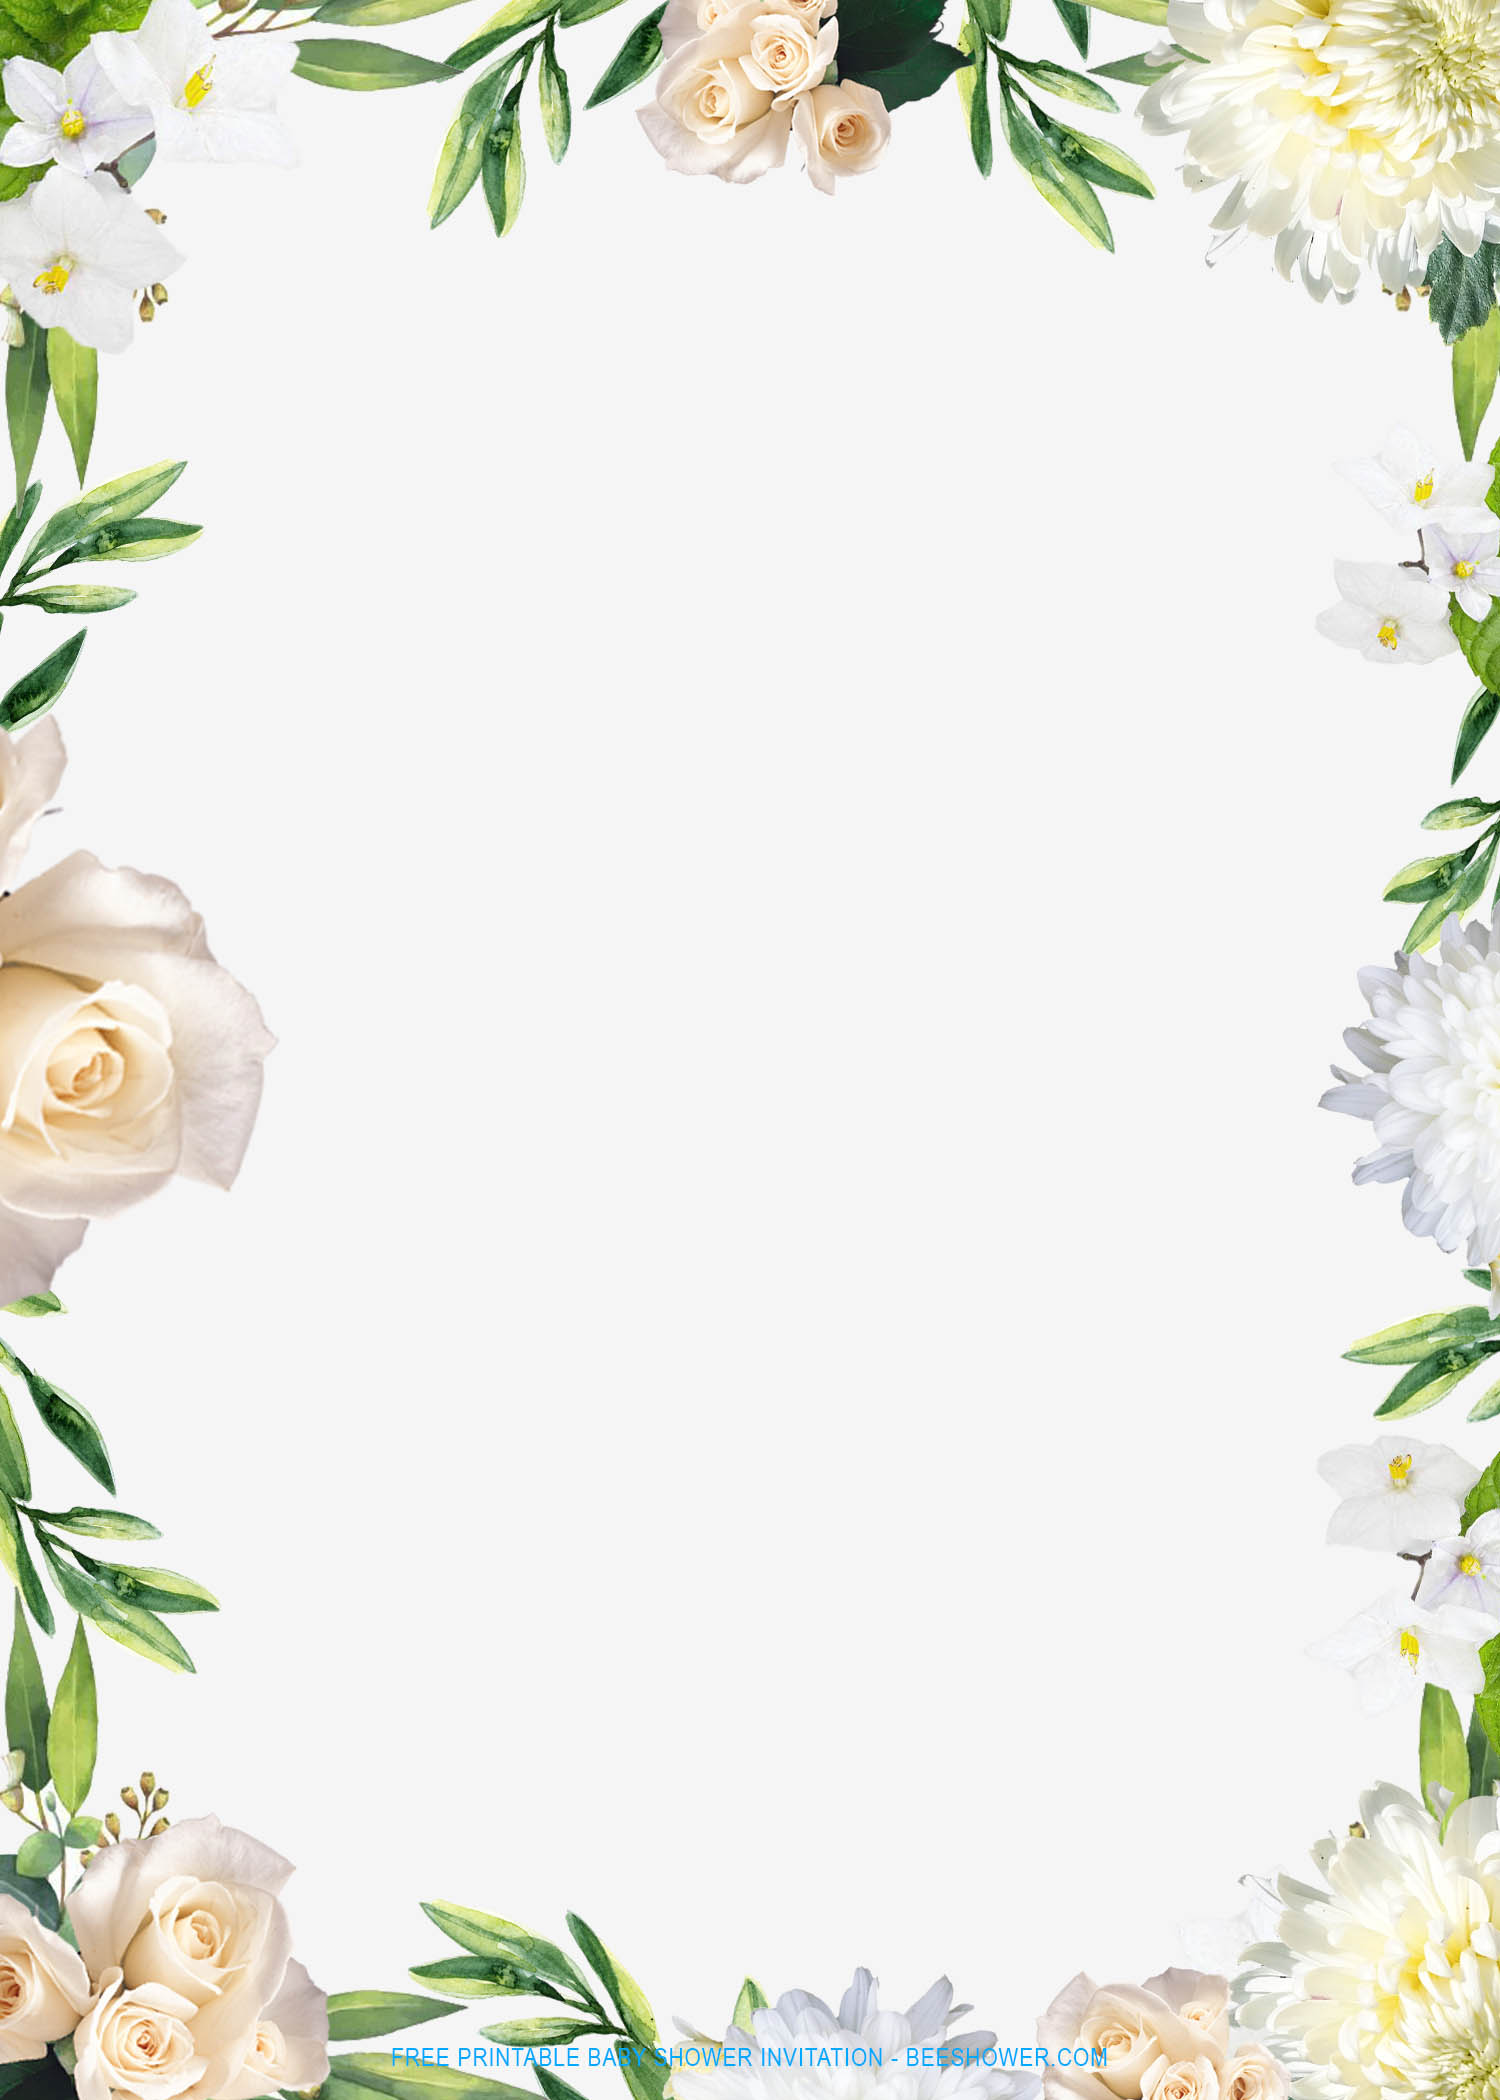 Download FREE Printable Floral Wedding Invitation Templates | Beeshower